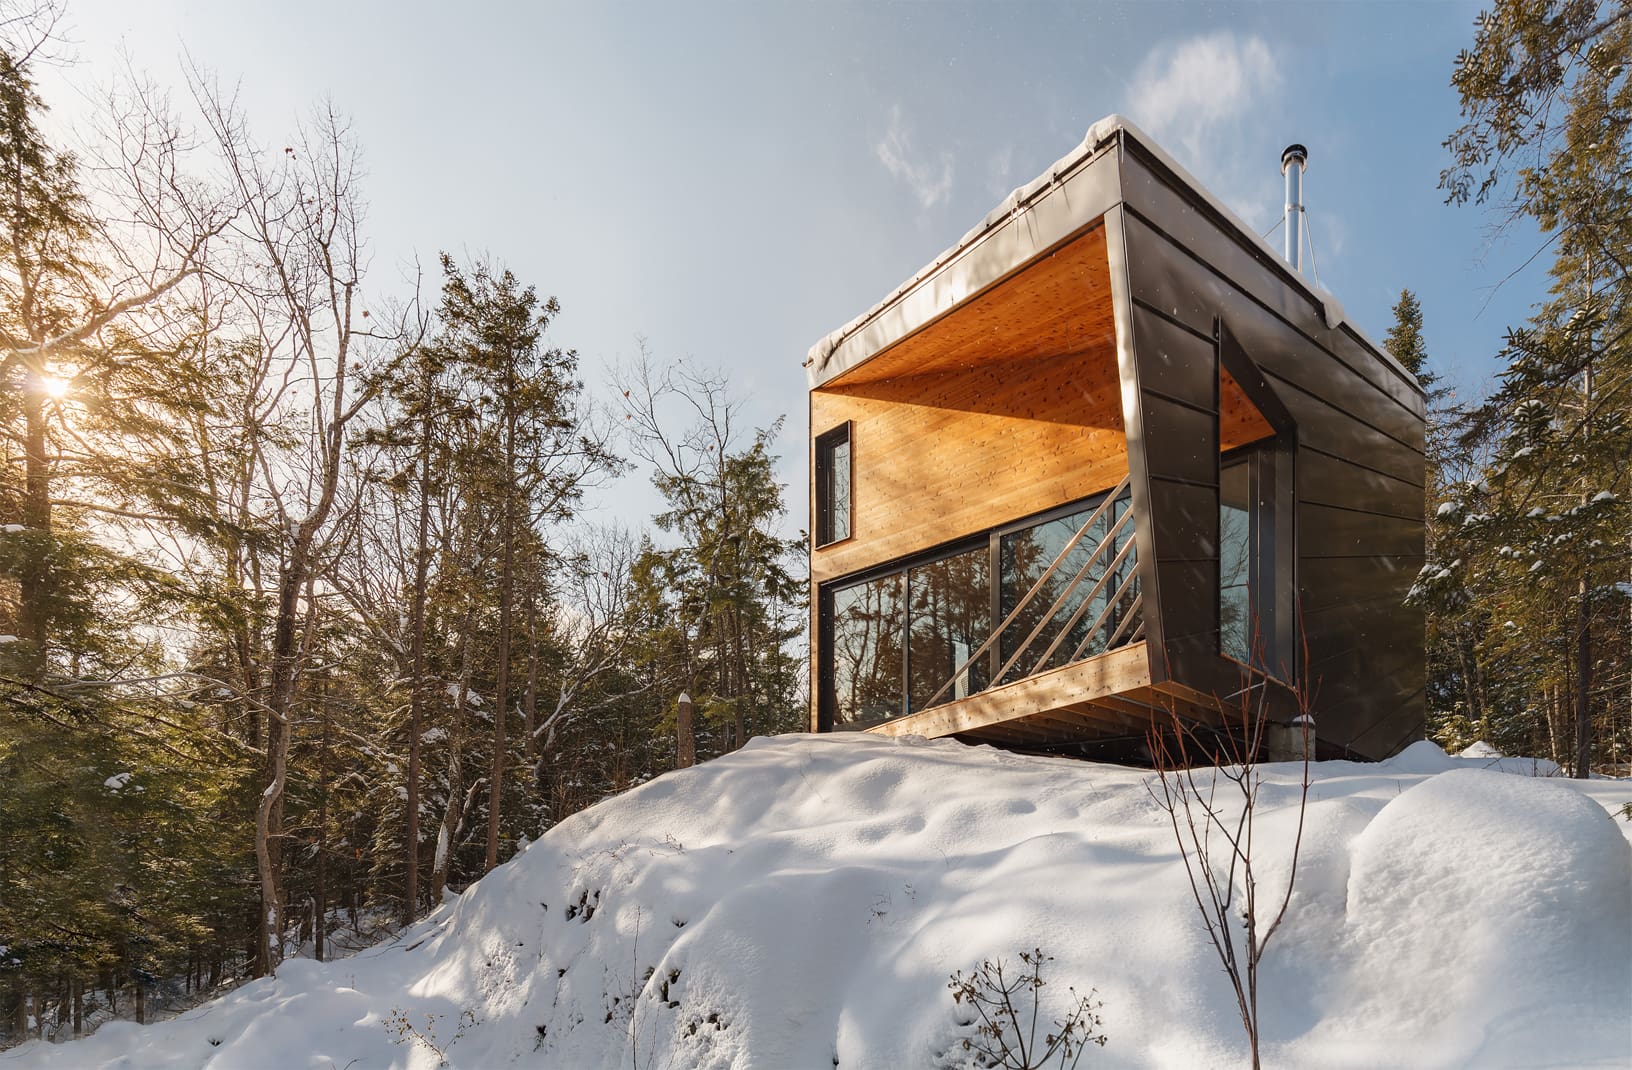 Side view of an angular modern prefab tiny house on a snowy hill